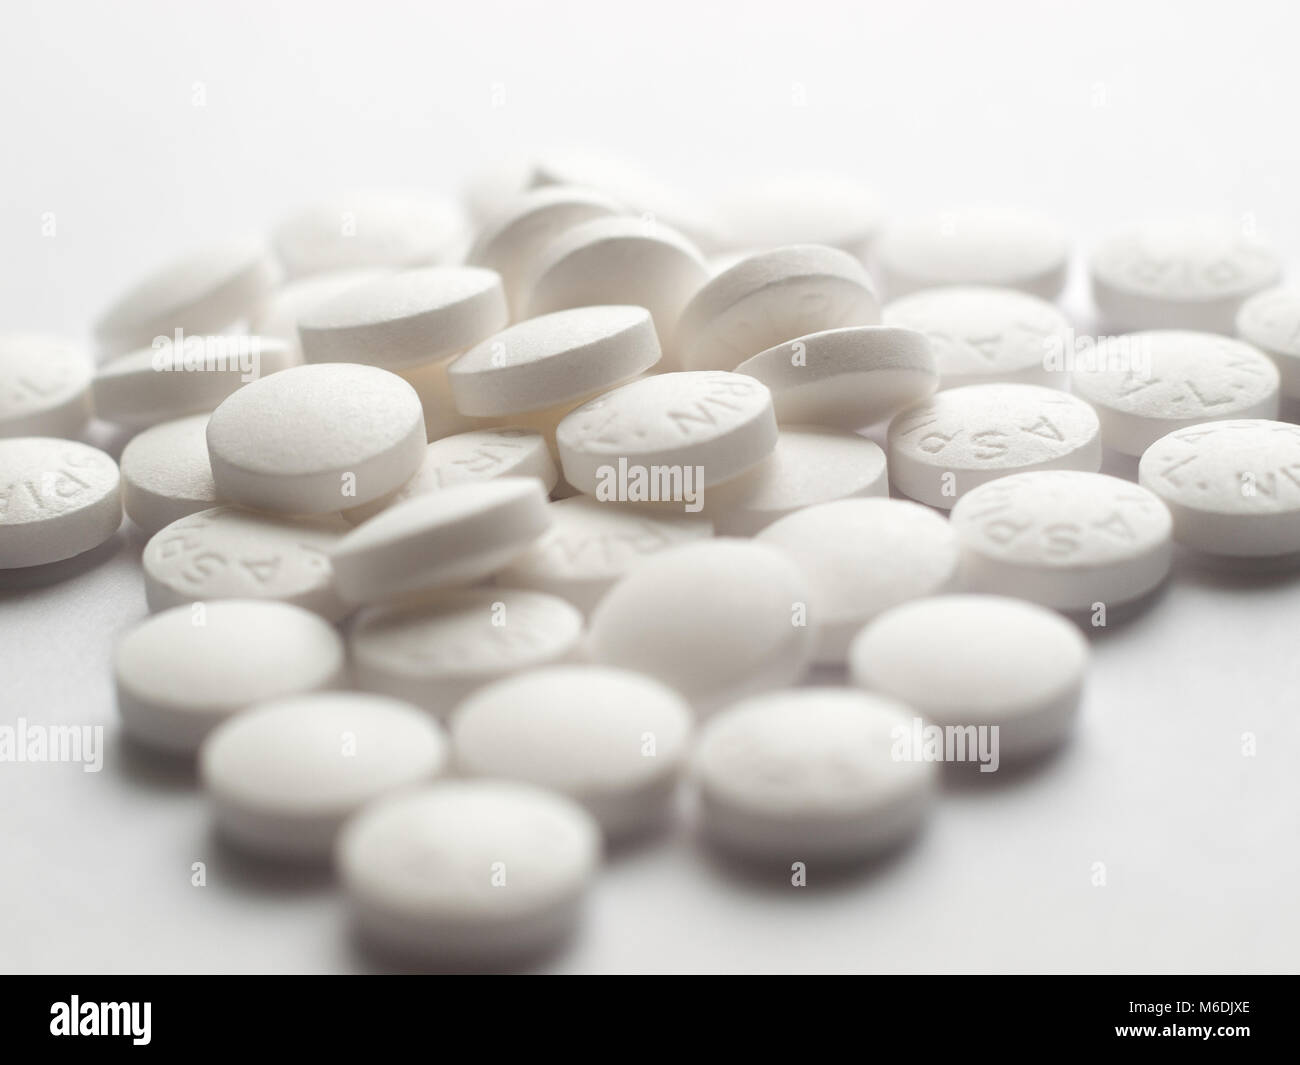 Hcl tramadol tablet bayer 50 or aspirin mg